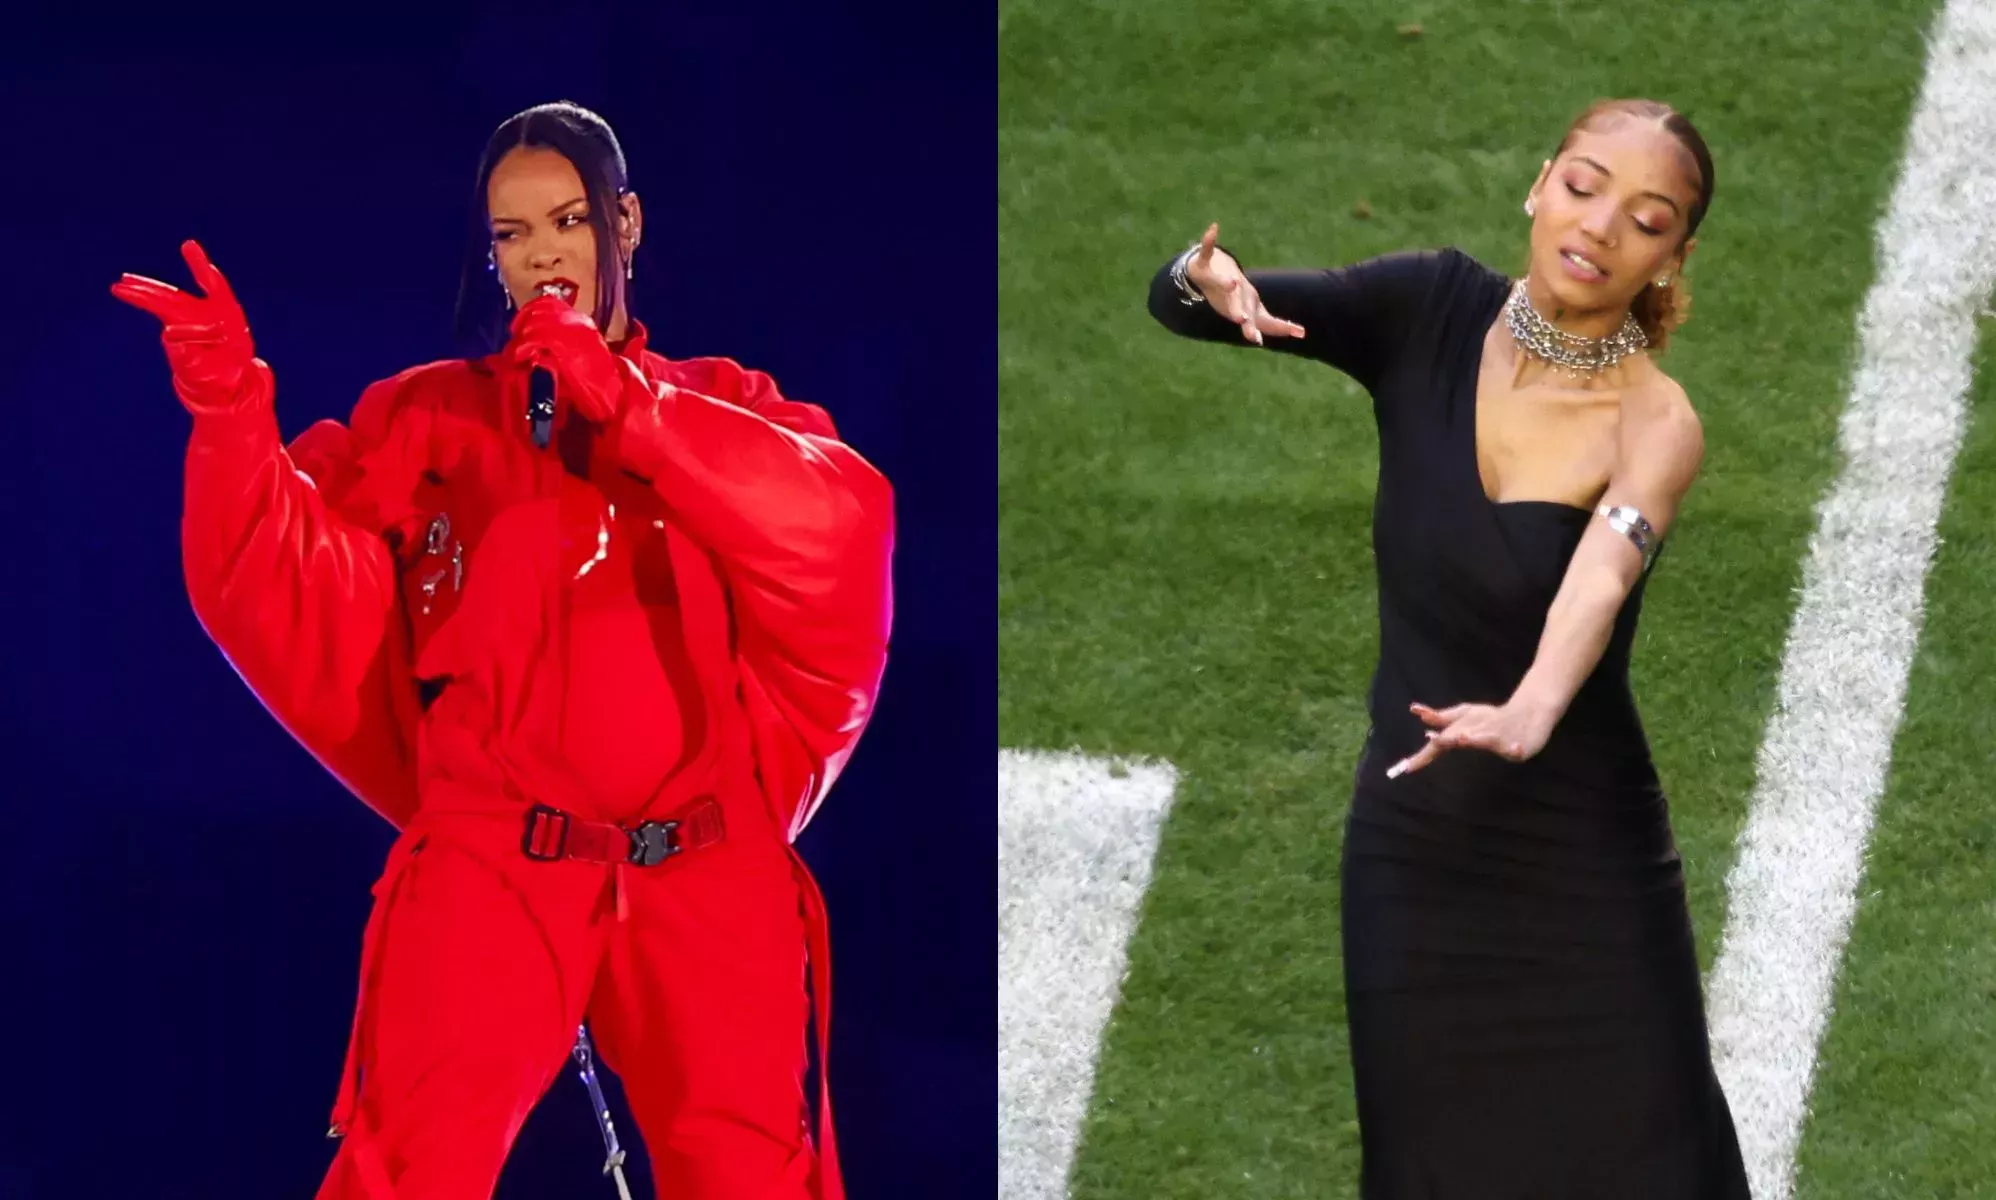 La intérprete de ASL de Rihanna en la Super Bowl se roba el show: 'Se comió esto'